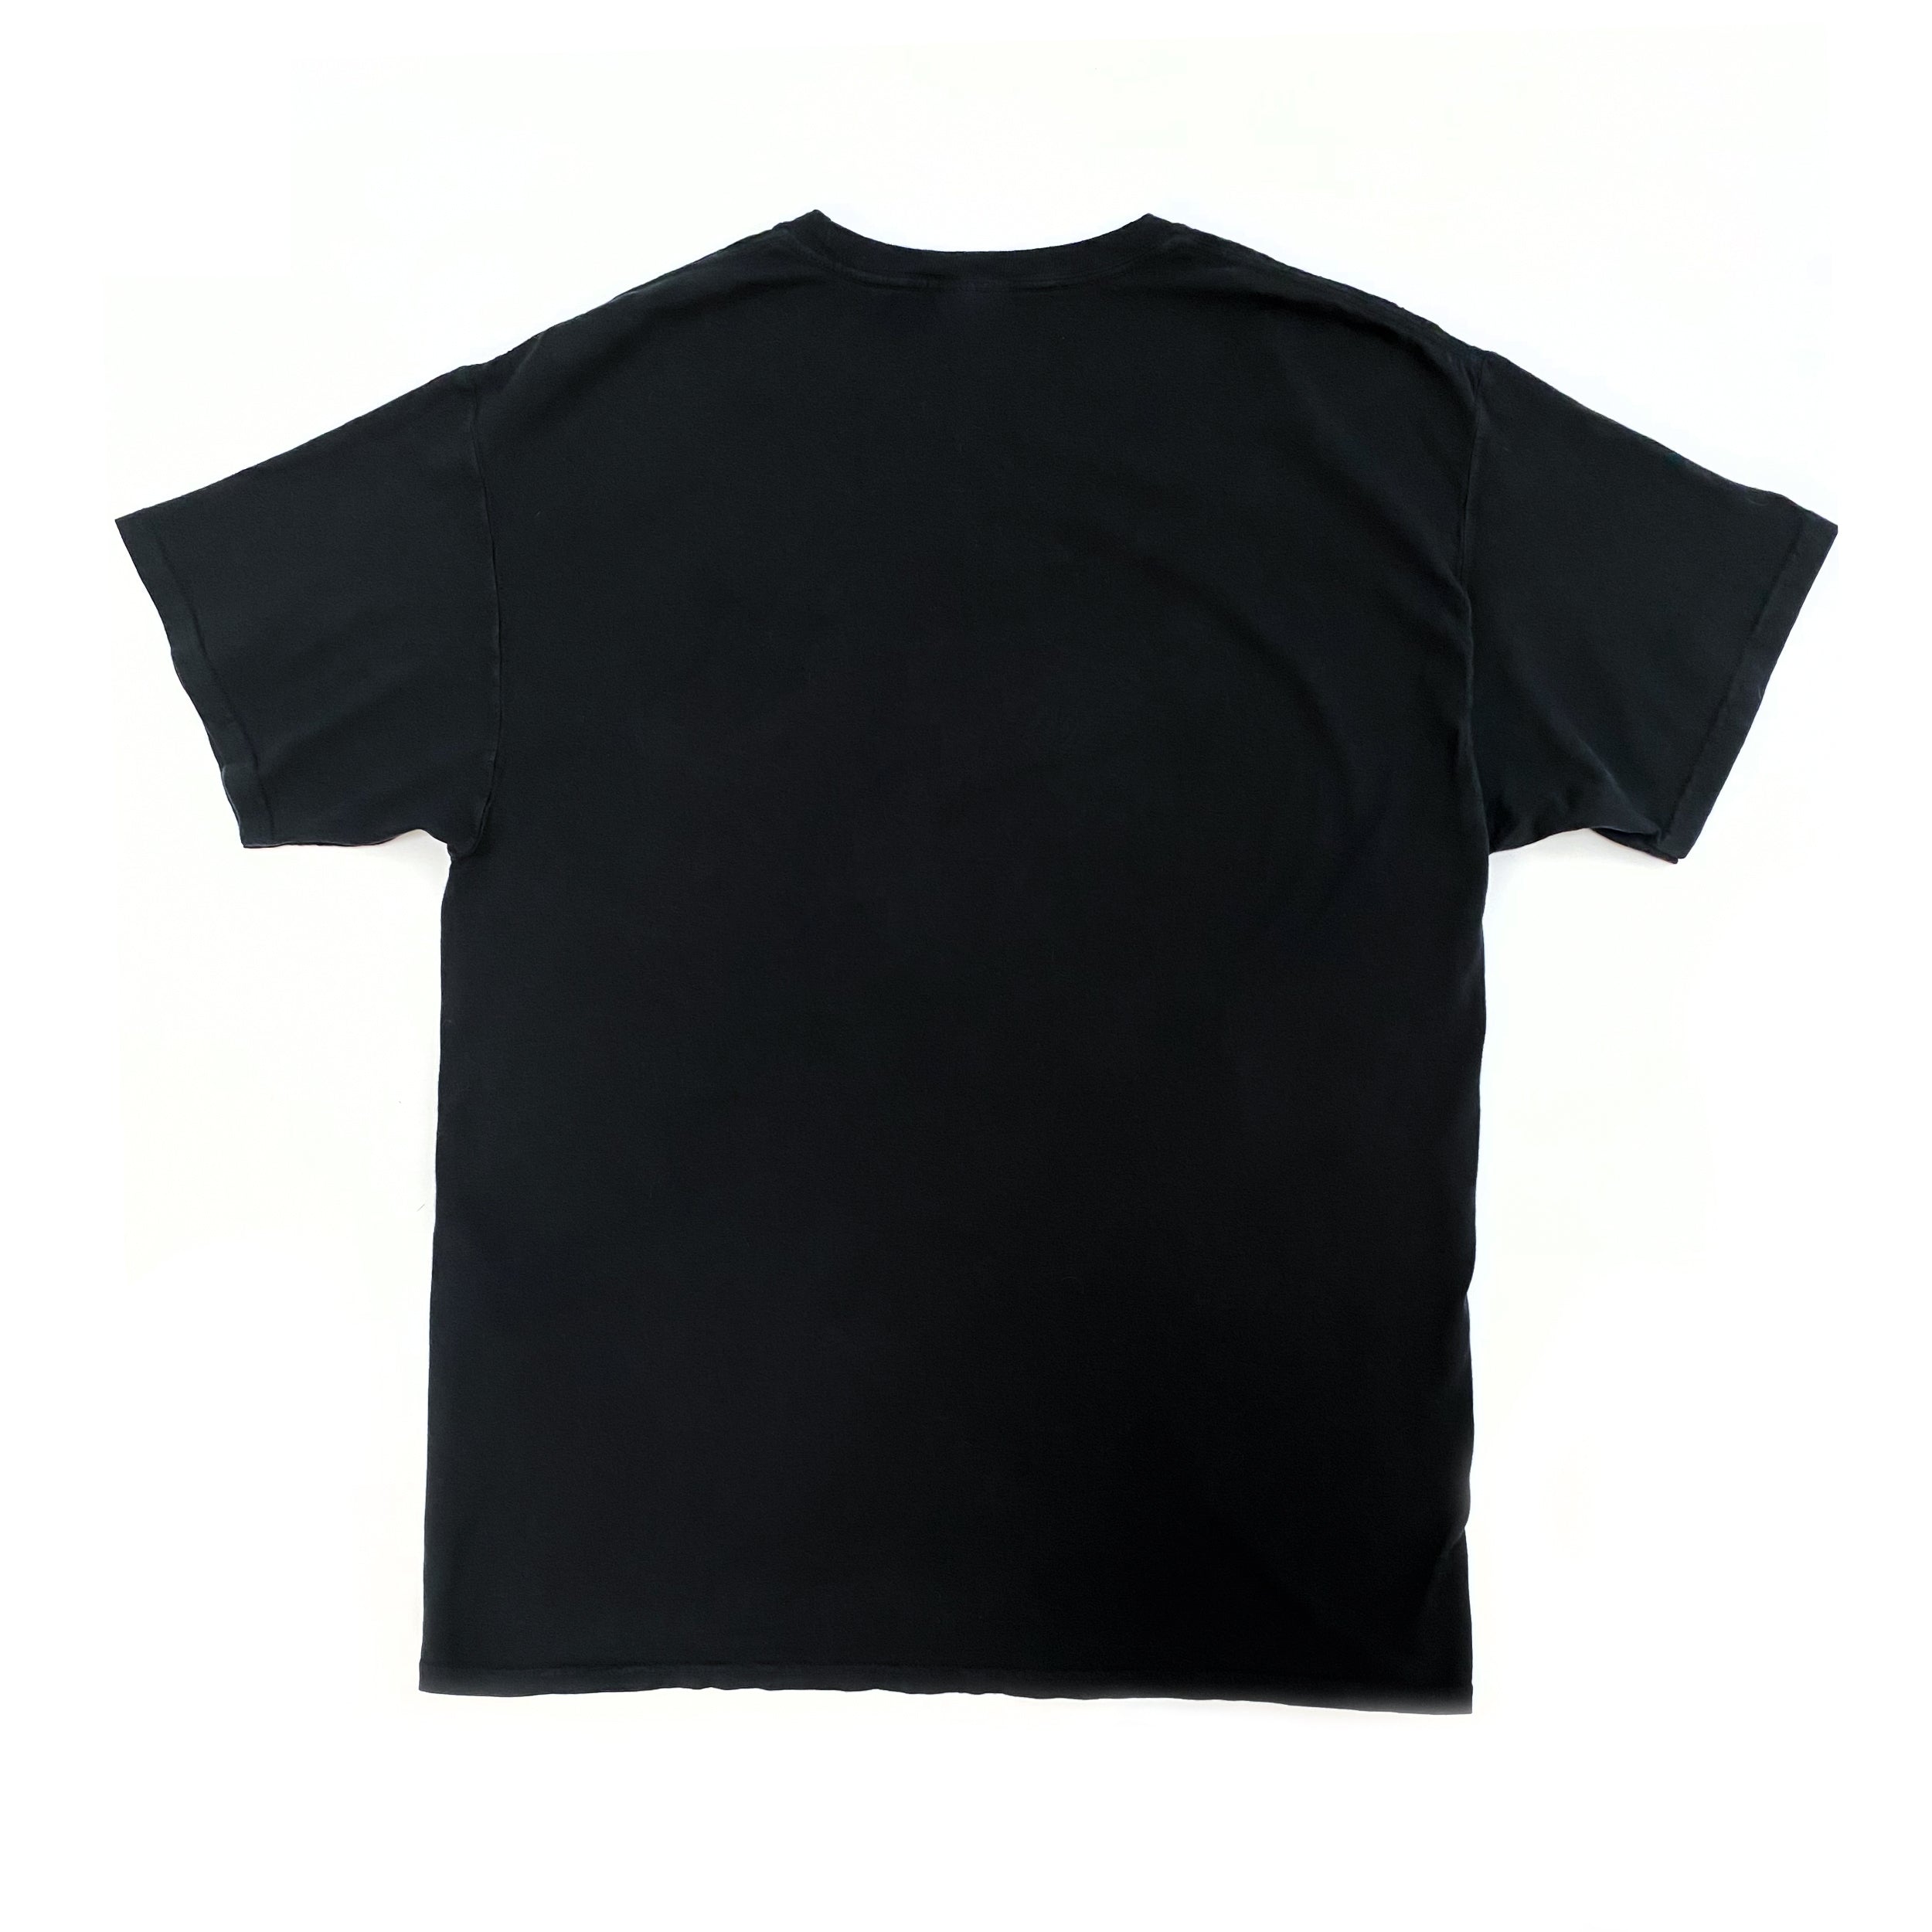 tee shirt black